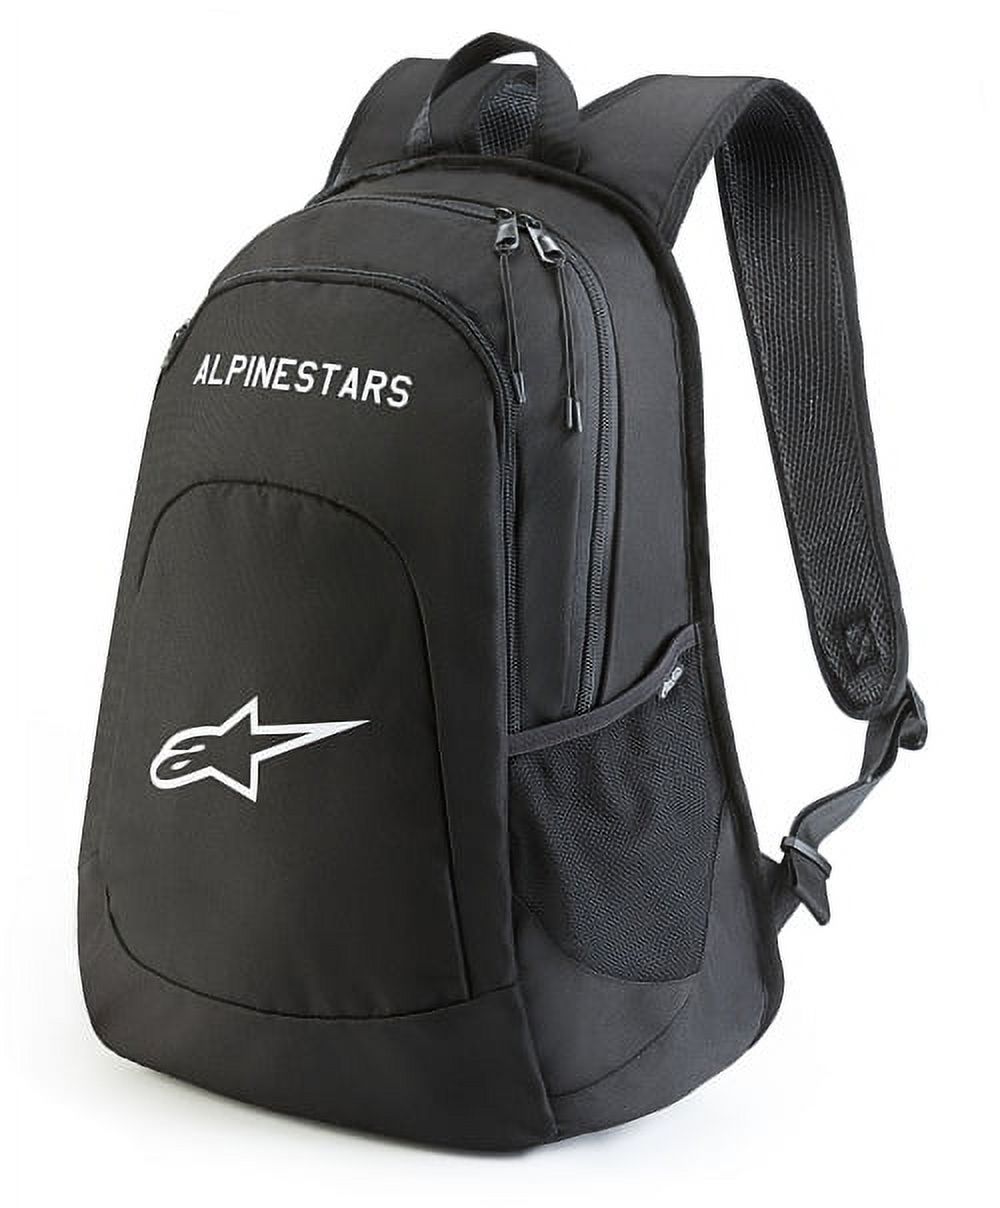 Alpinestars Defcon Backpack - Black/White - image 2 of 2